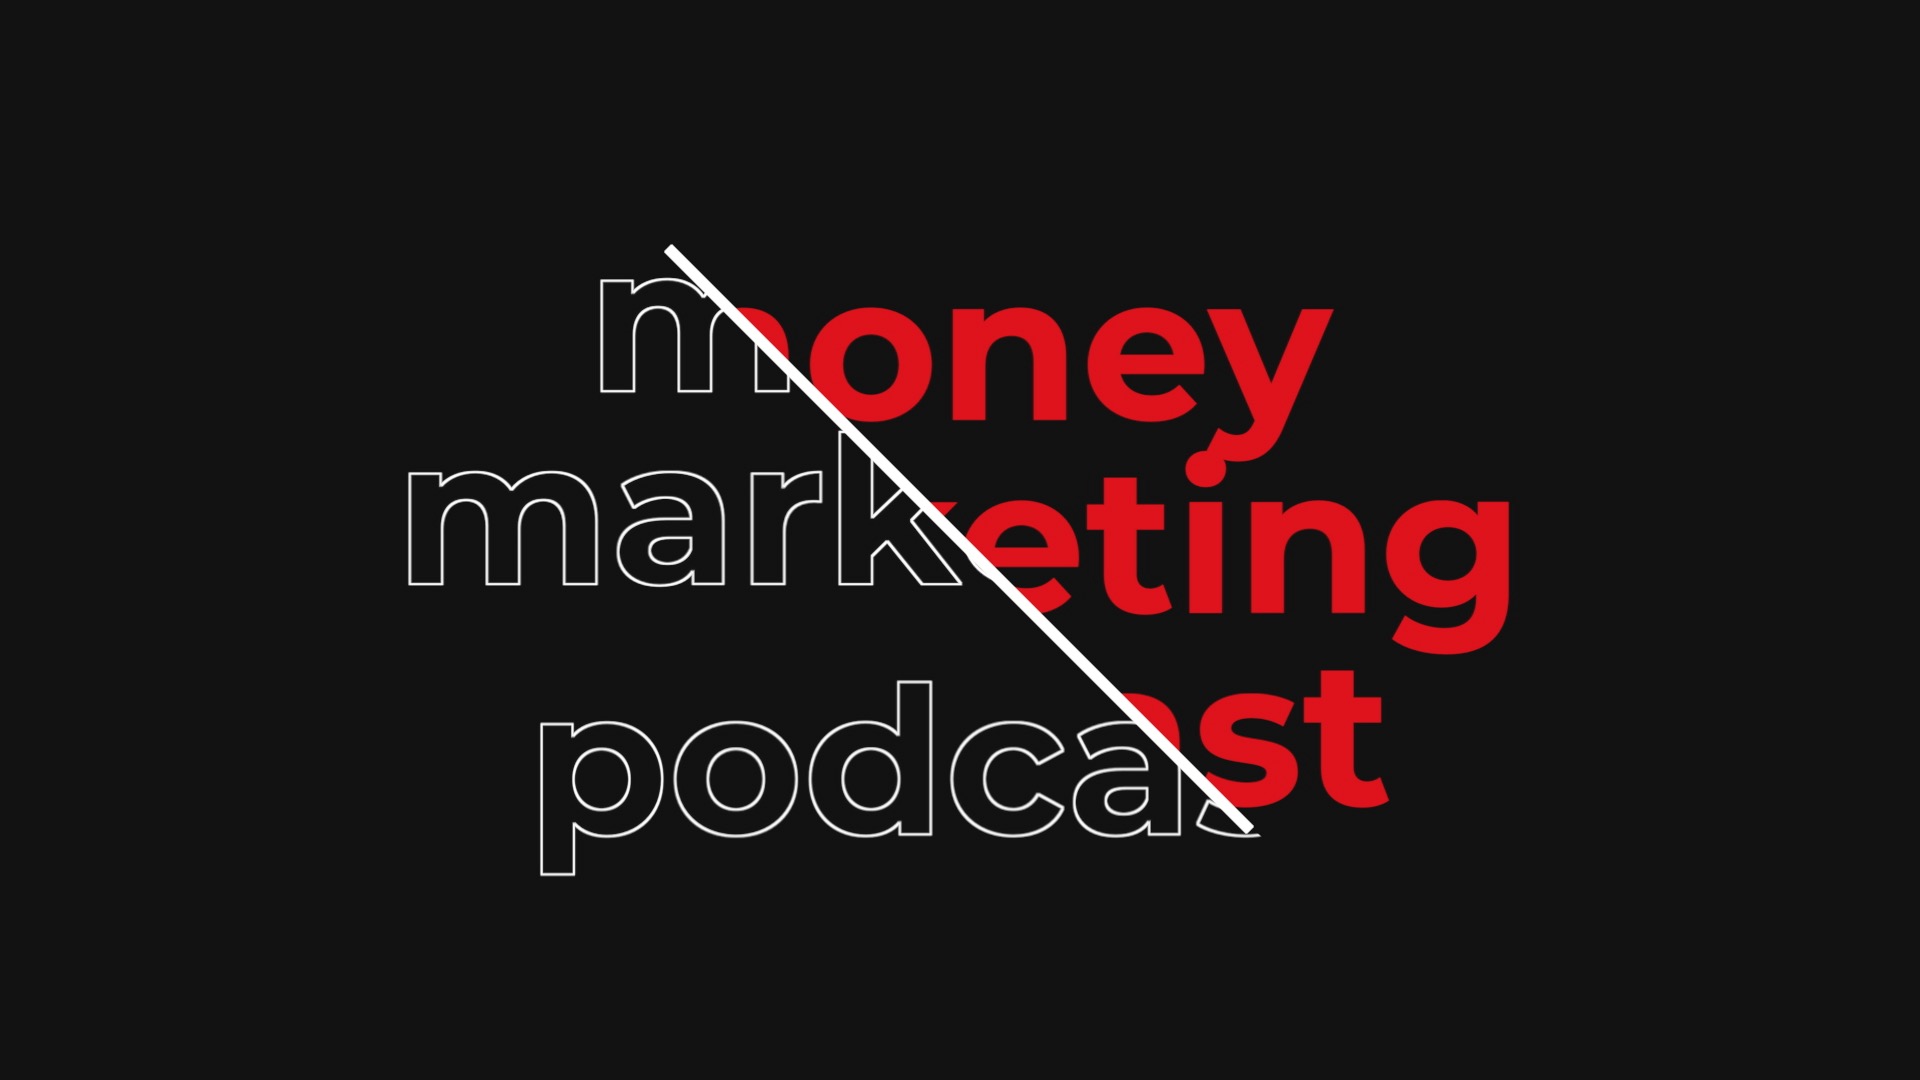 "money marketing podcast"